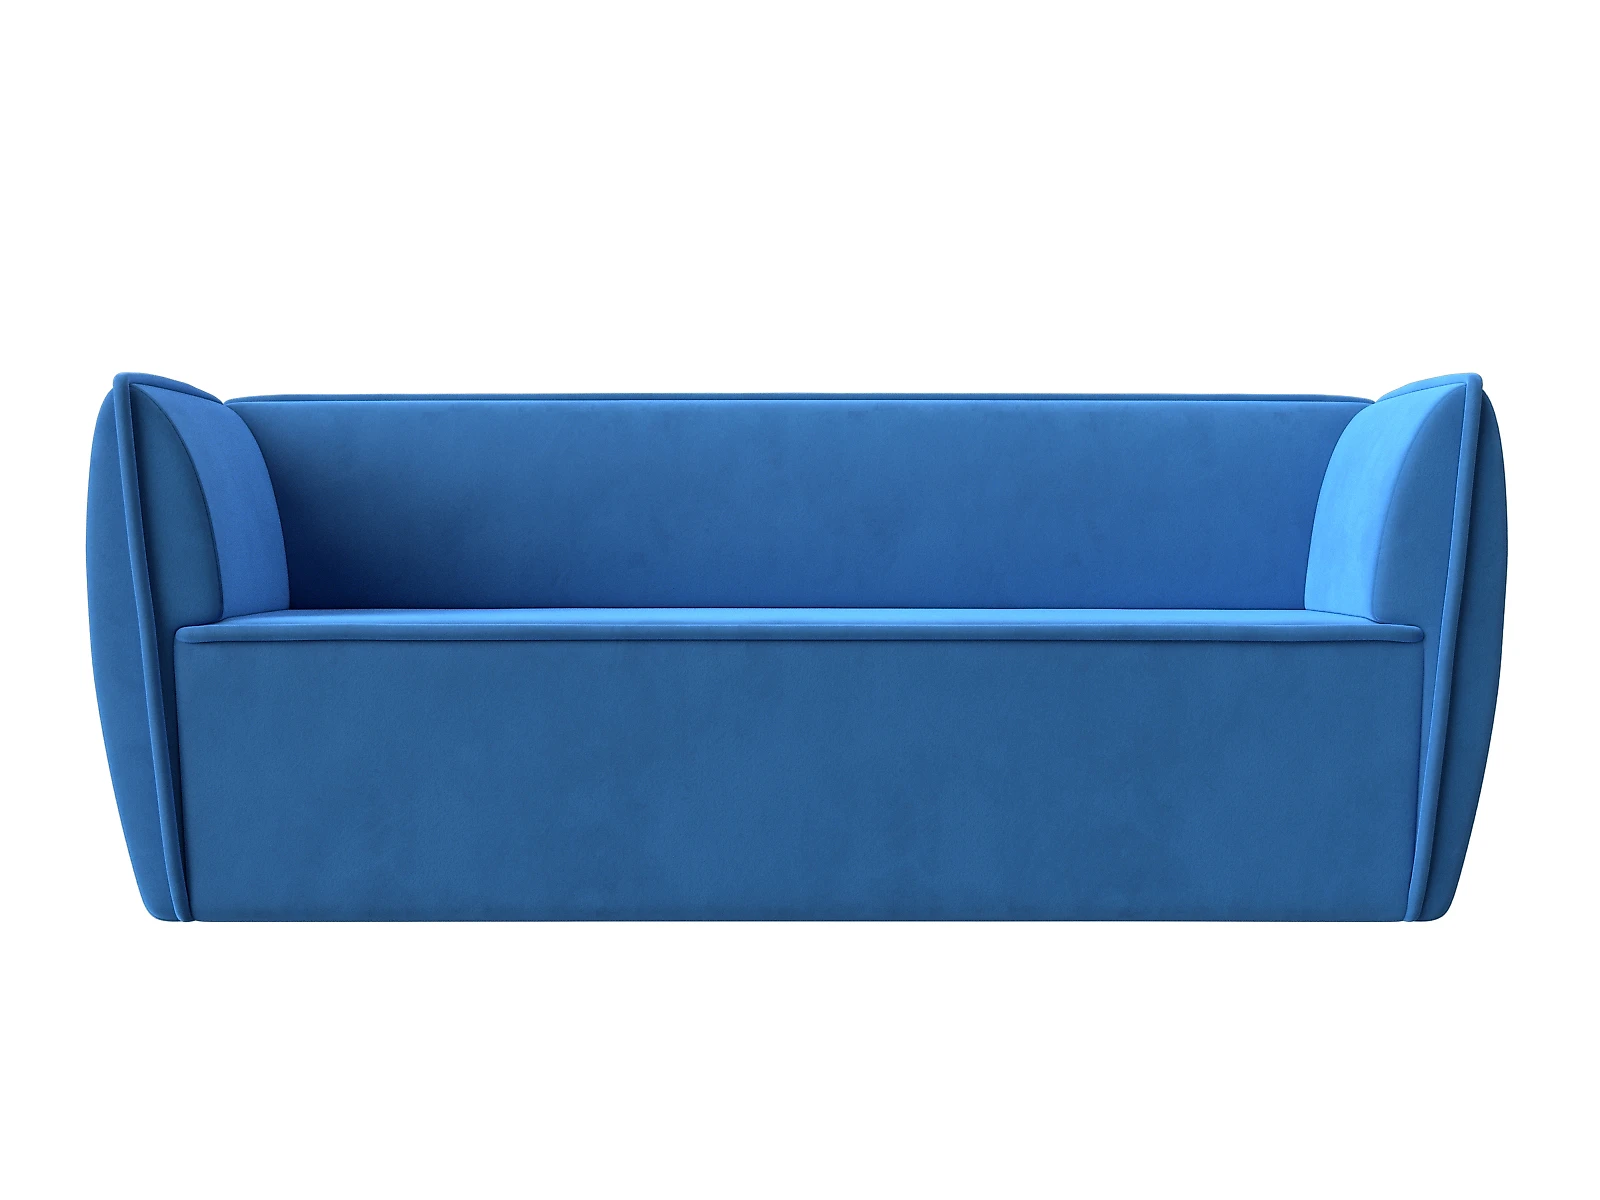  голубой диван  Бергамо-3 Плюш Дизайн 5